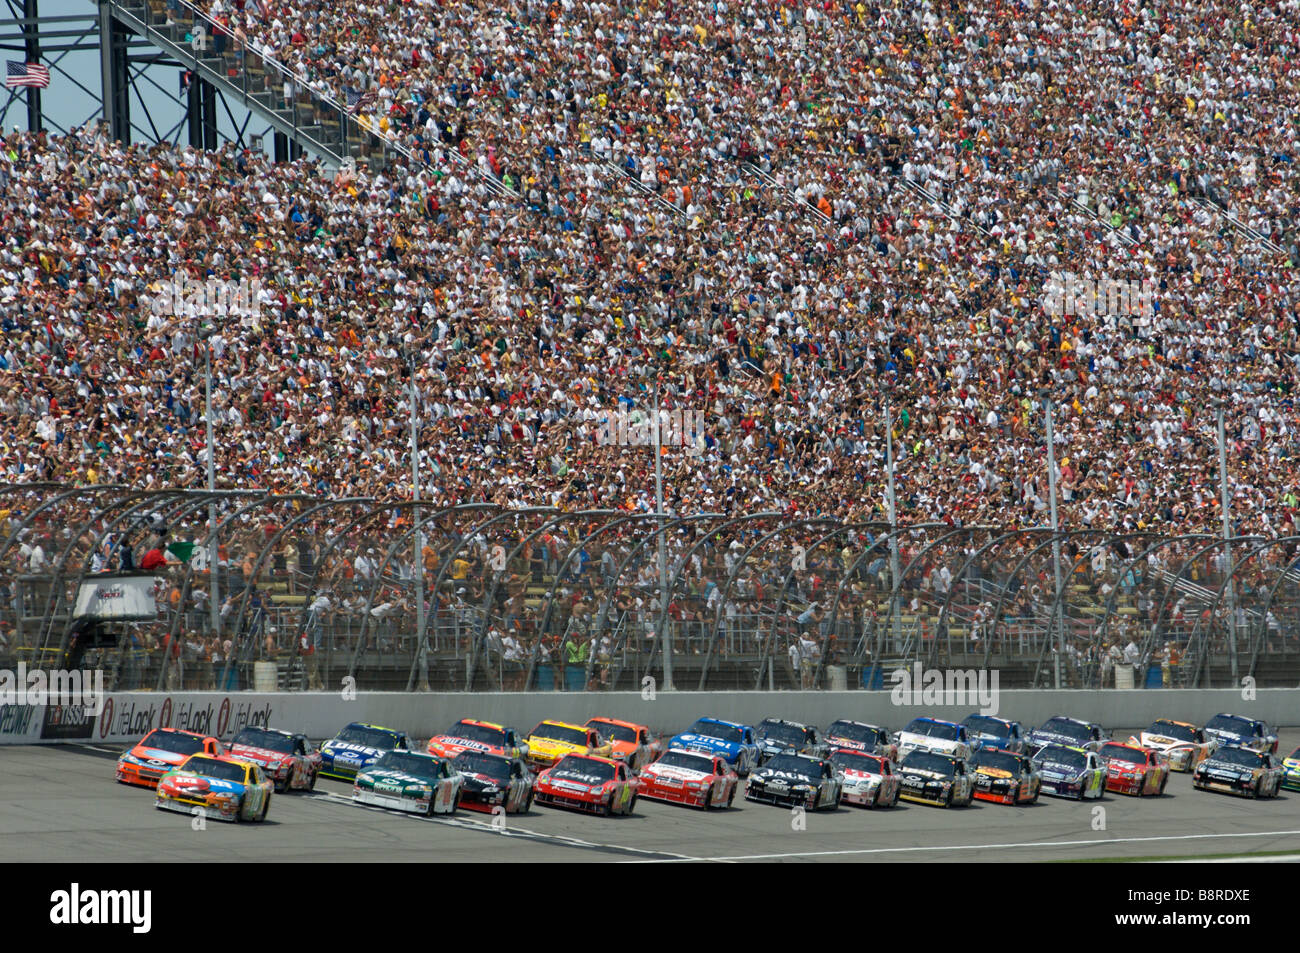 Start of the LifeLock 400 NASCAR race at Michigan International Speedway Stock Photo